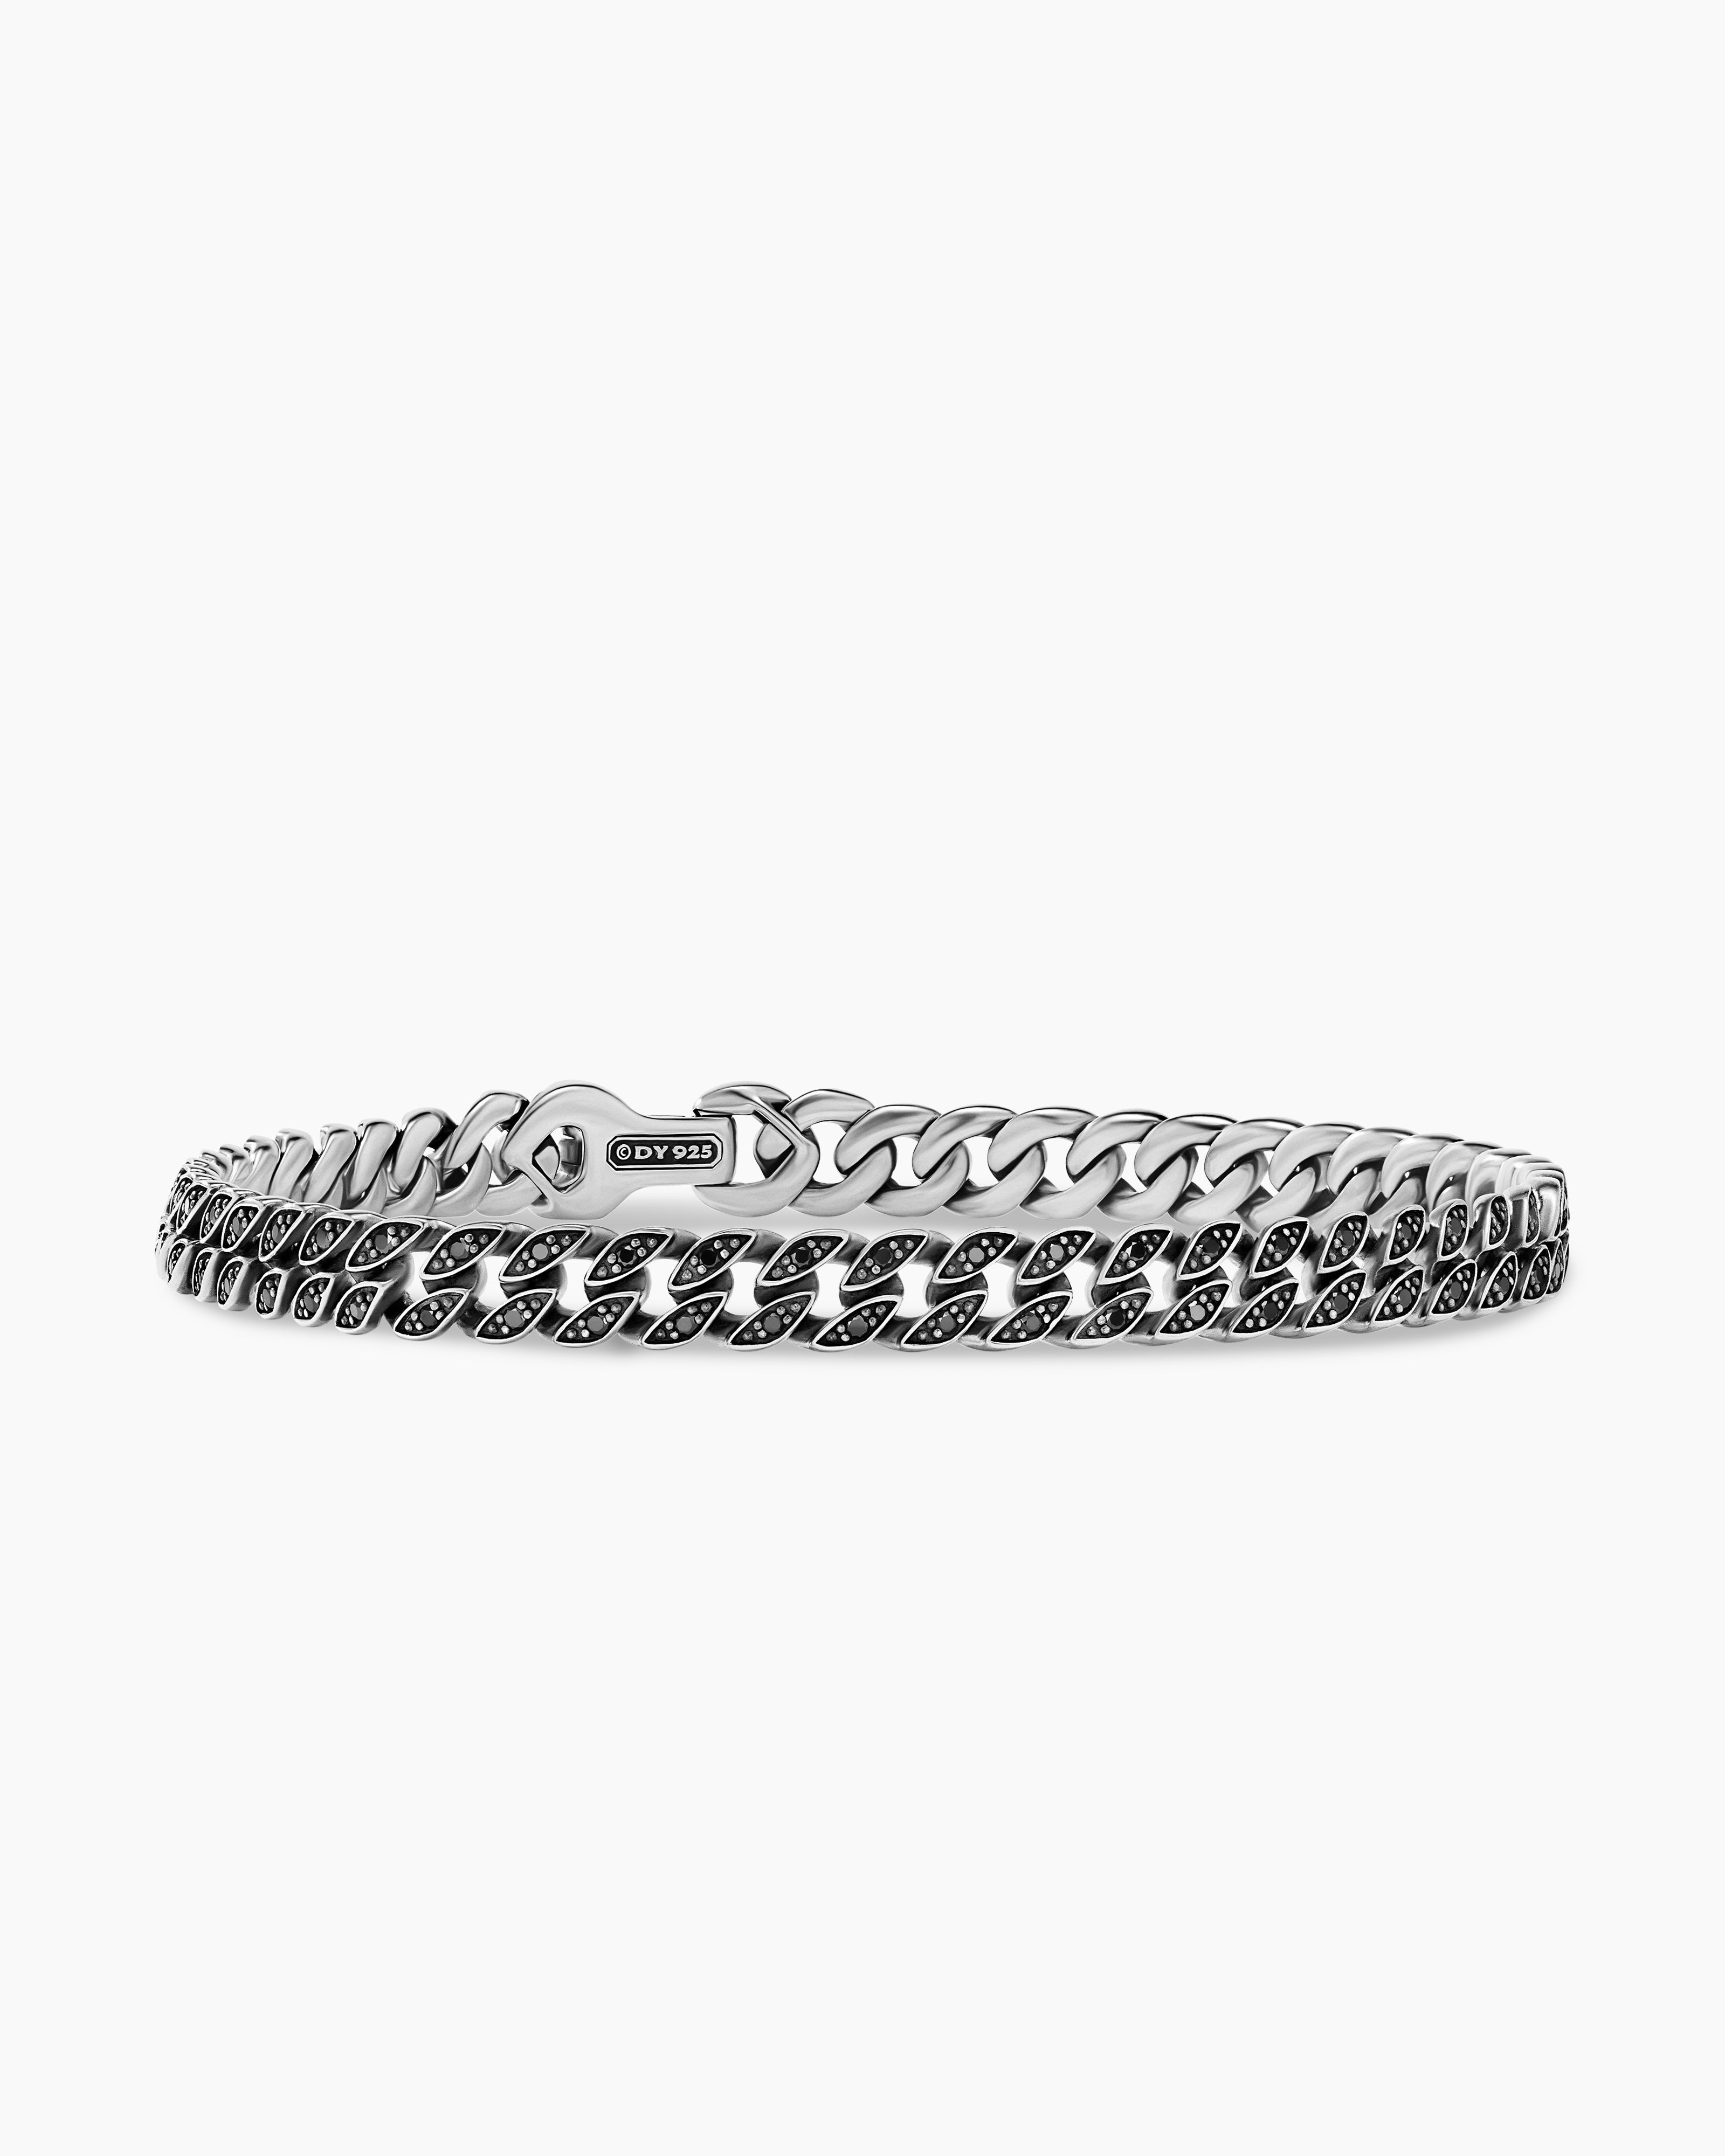 Buy quality 92.5 sterling silver bracelet in Ahmedabad